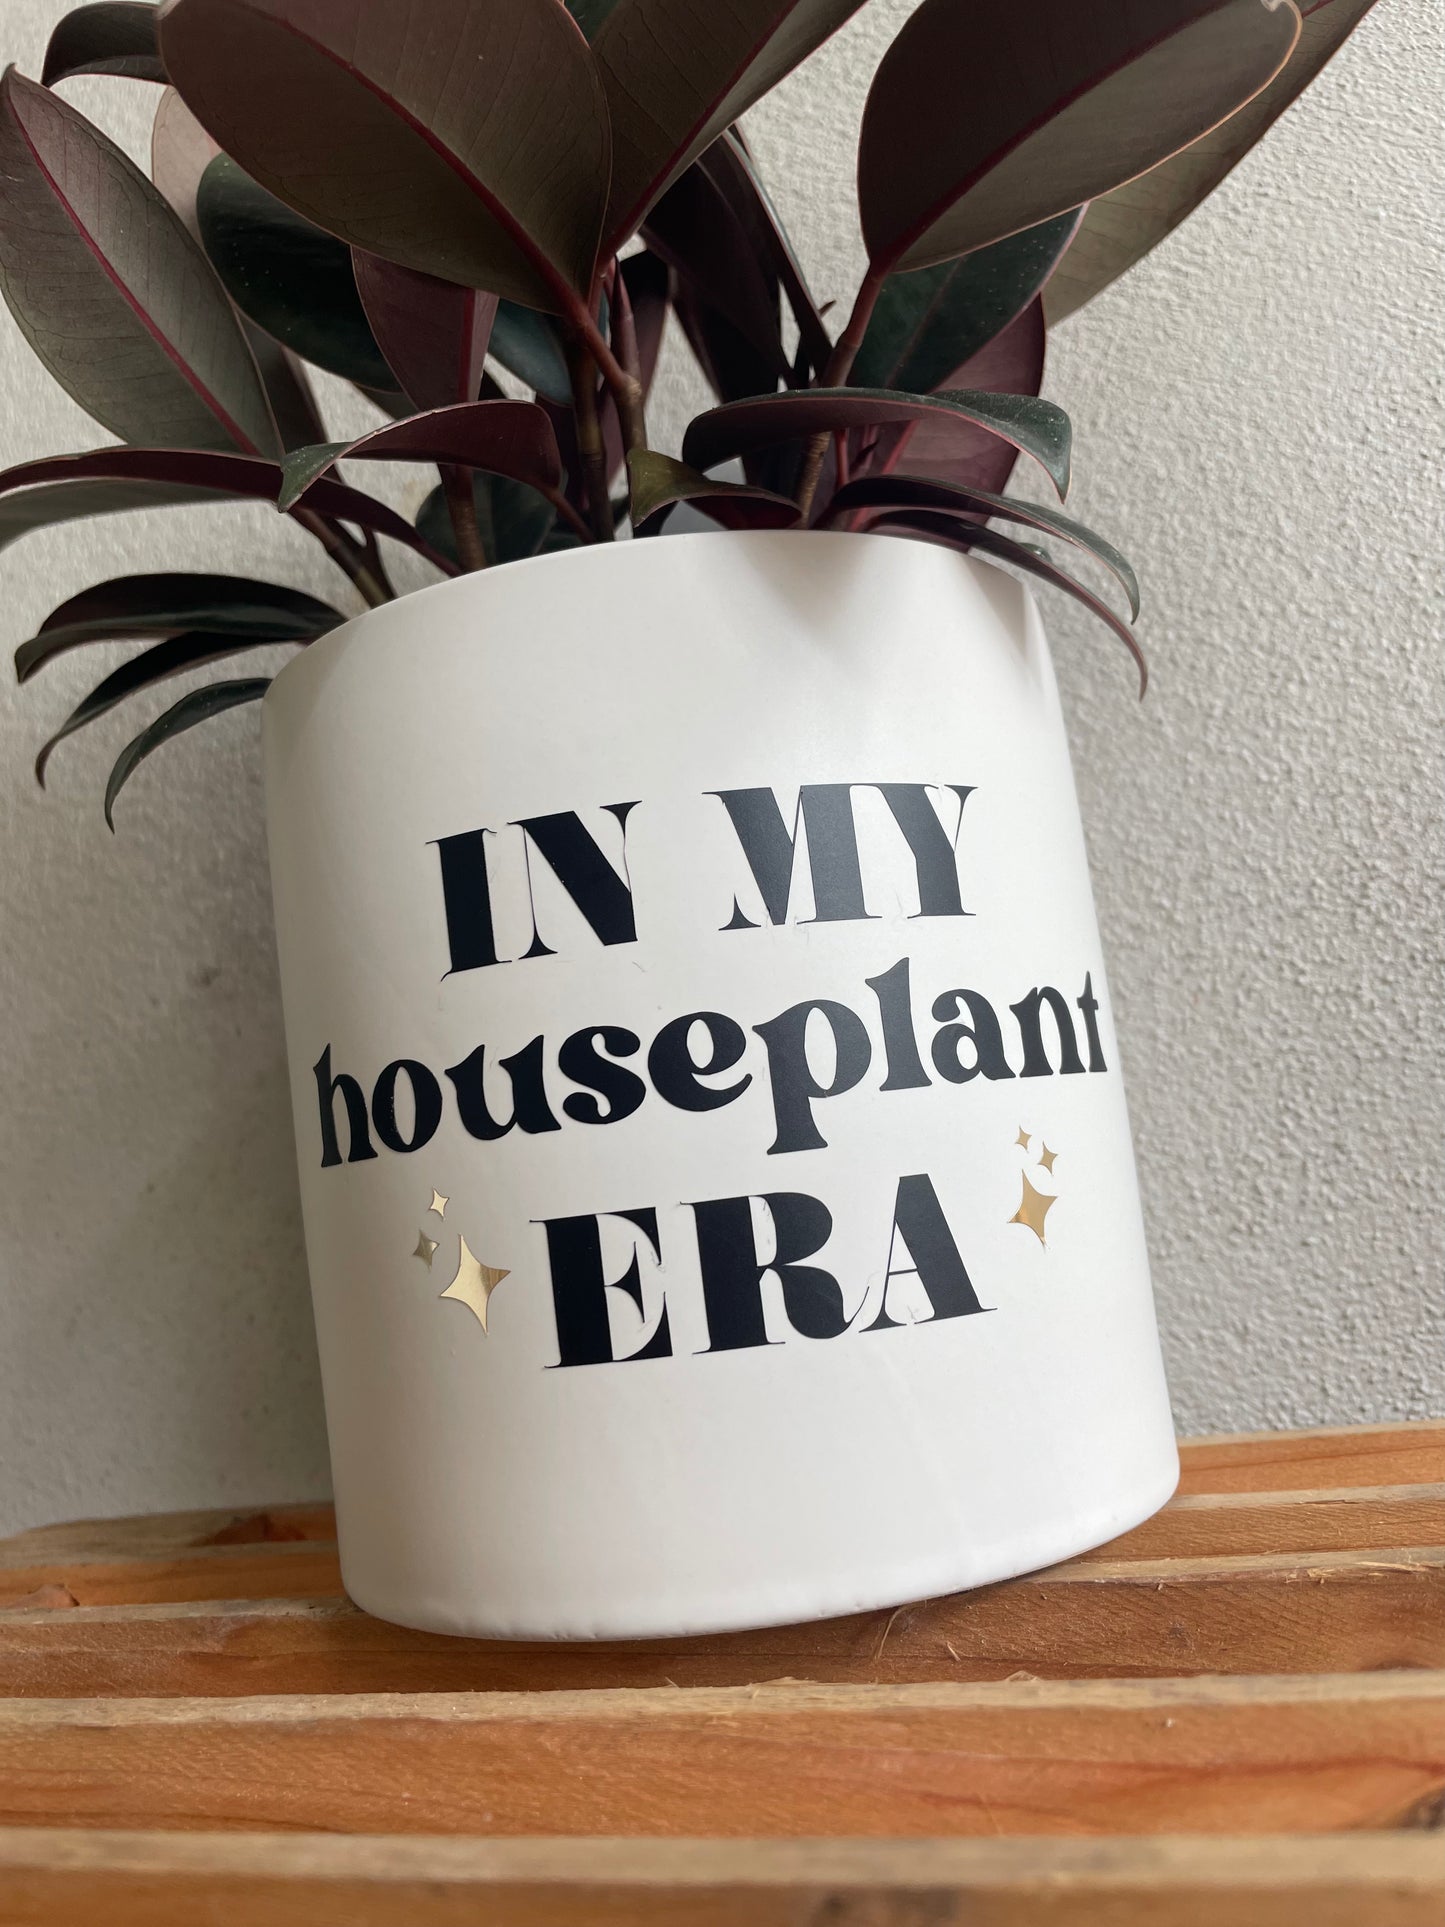 *NEW* In my houseplant era Planter